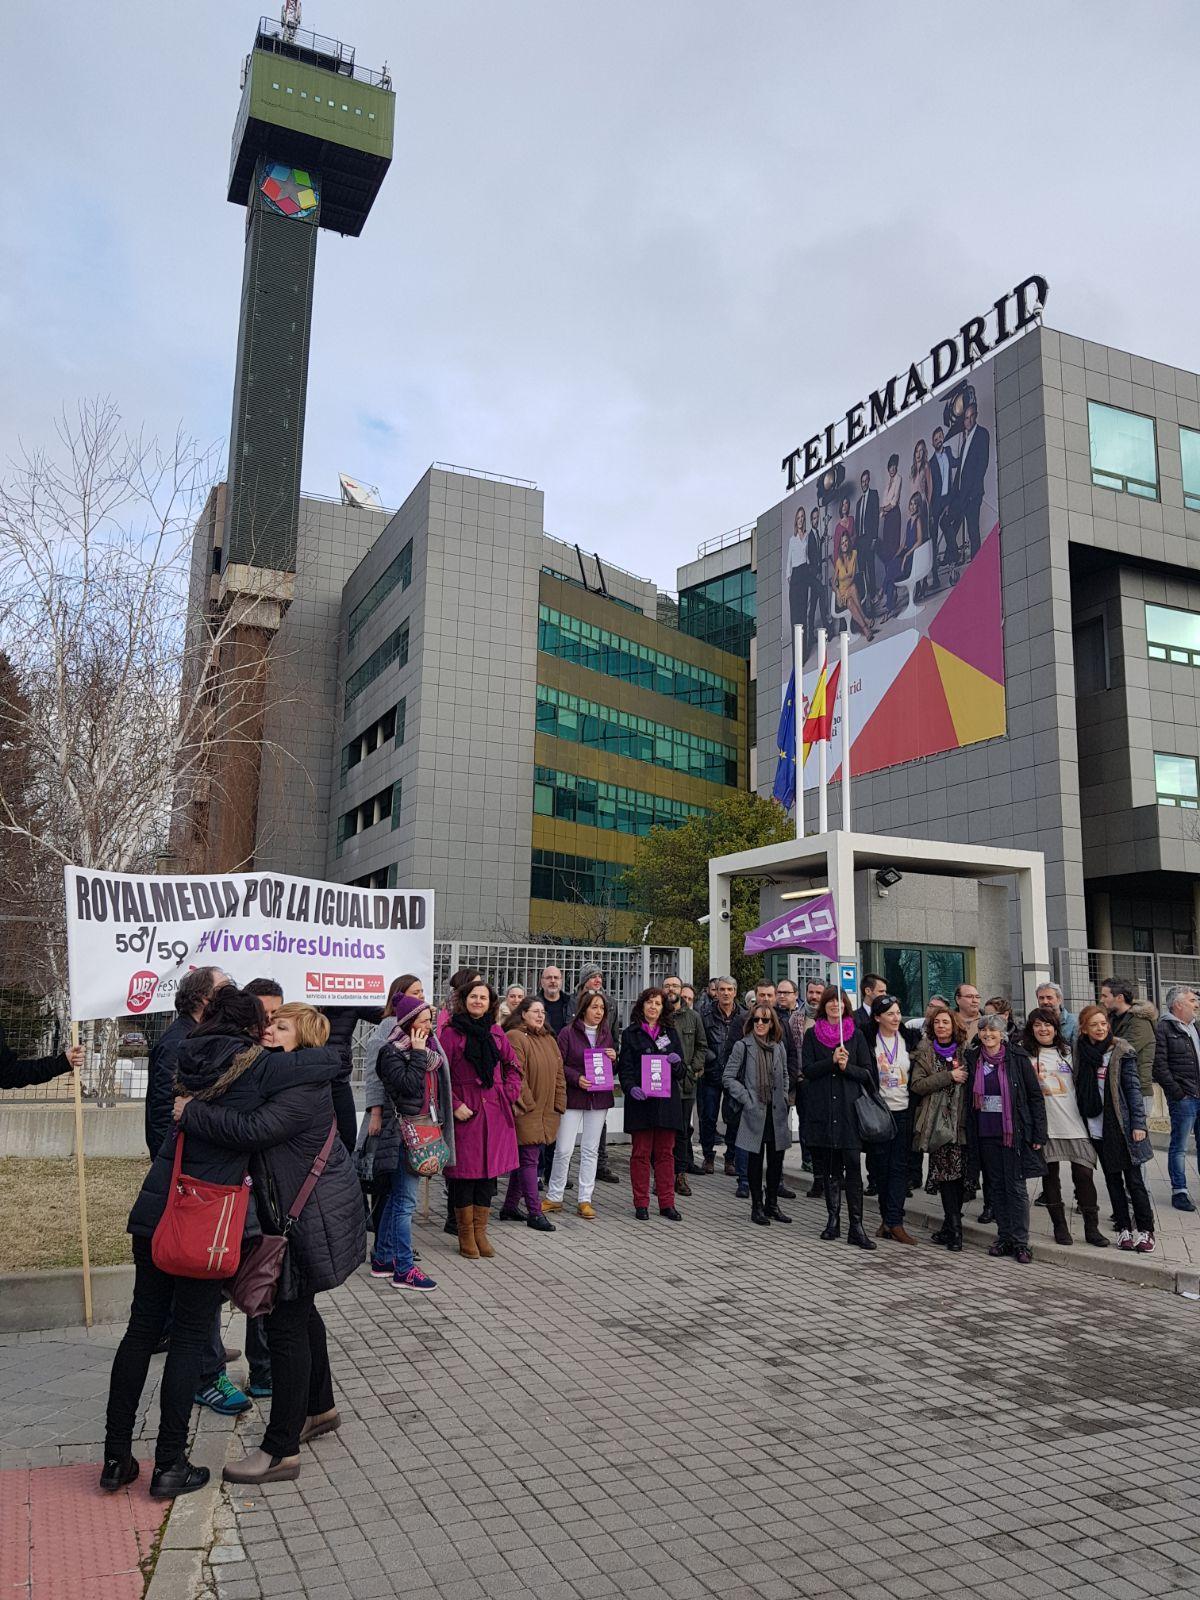 Huelga general del 8 de marzo de 2018, Telemadrid